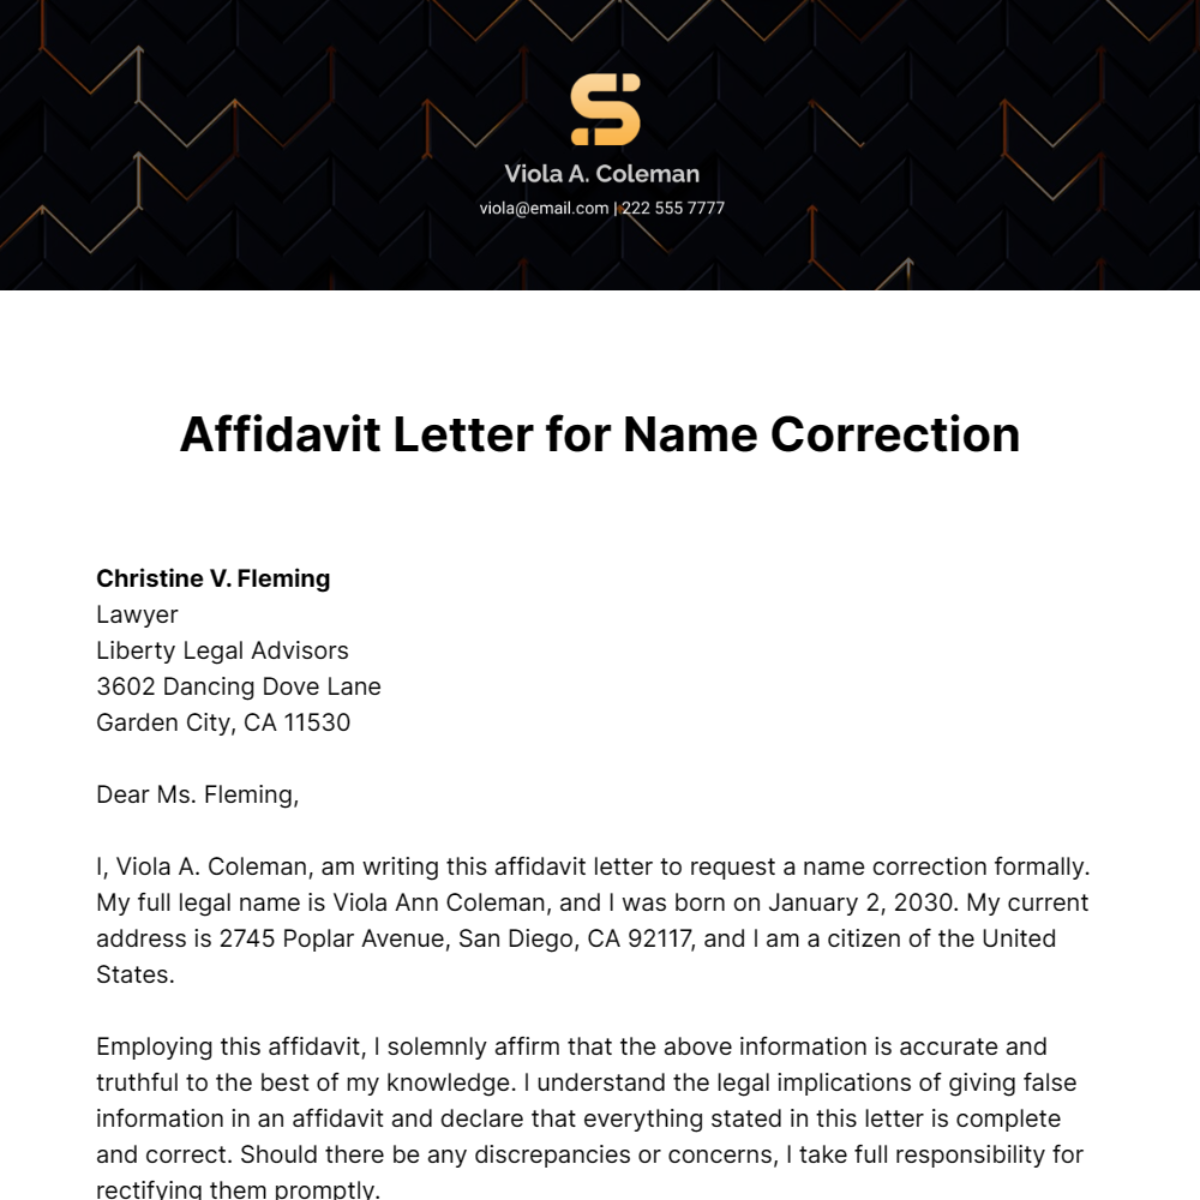 Affidavit Letter for Name Correction Template